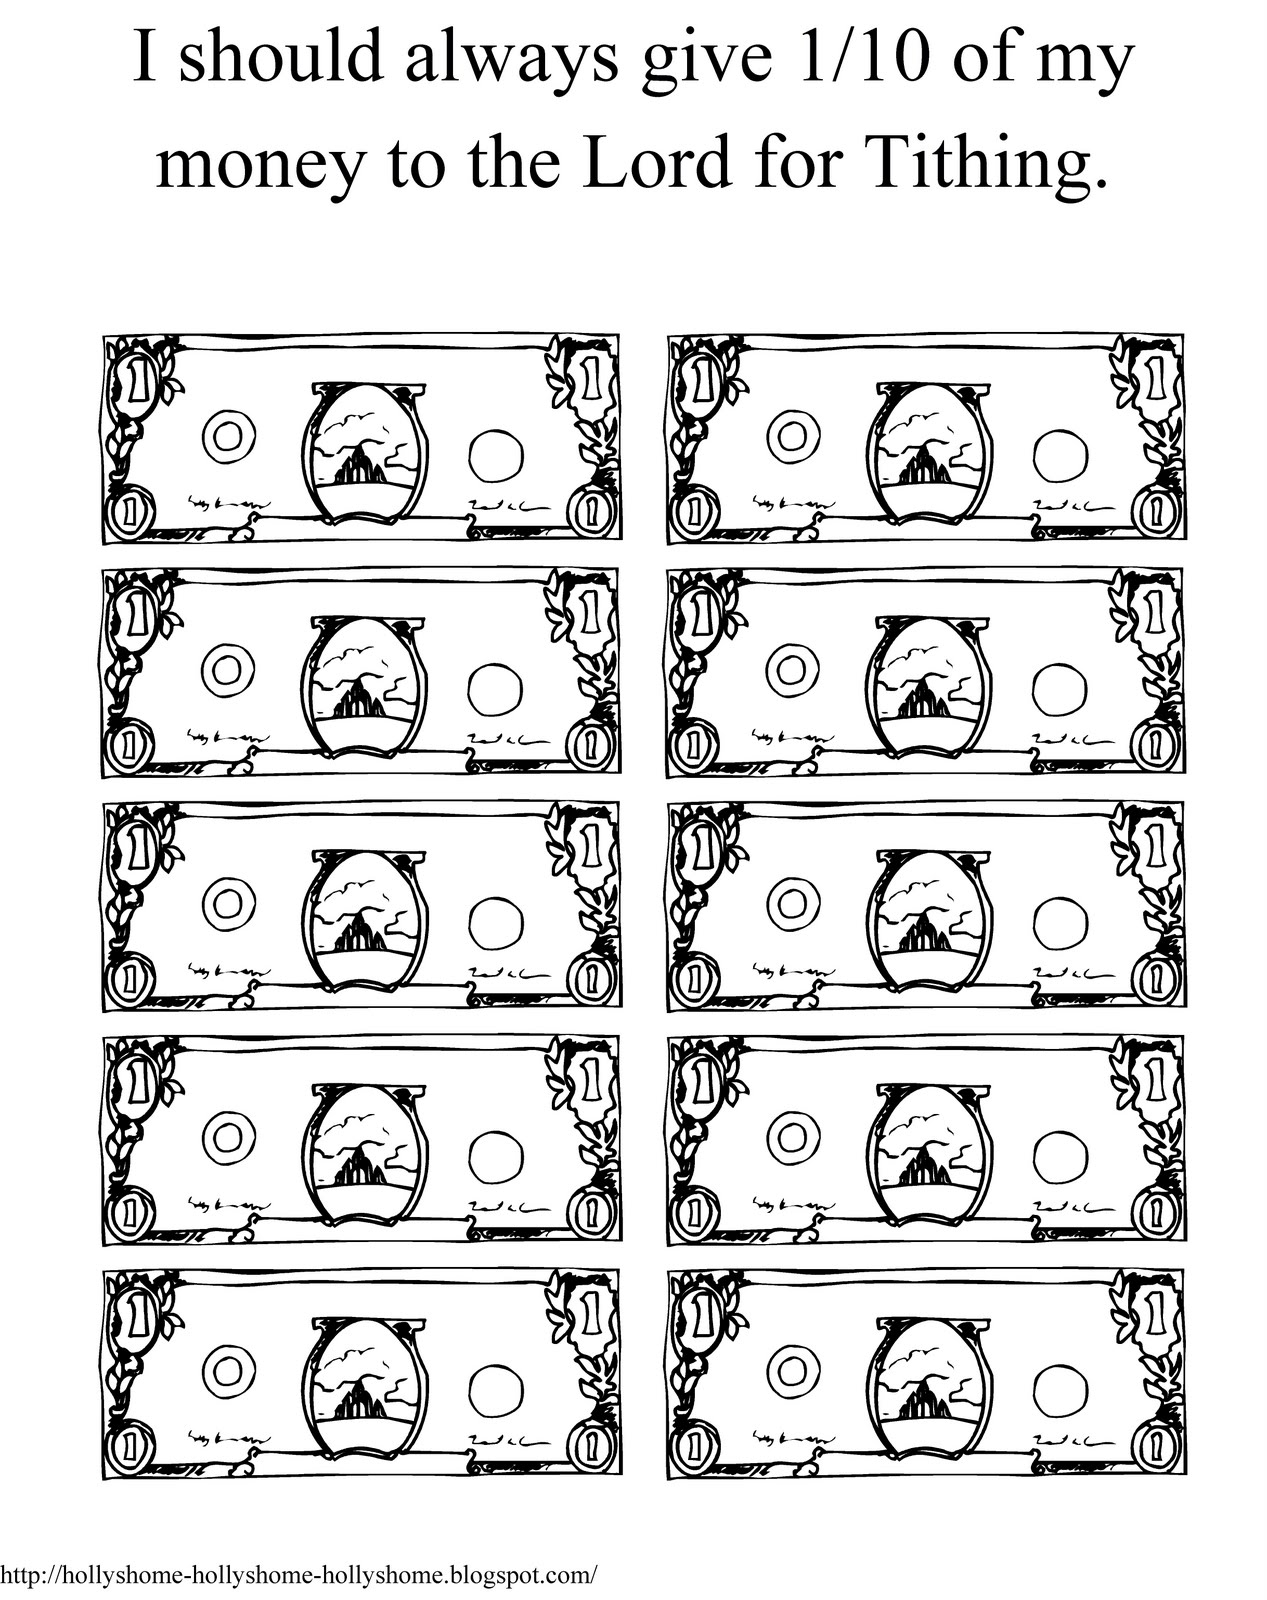 Download HollysHome - Church Fun: Tithing Money